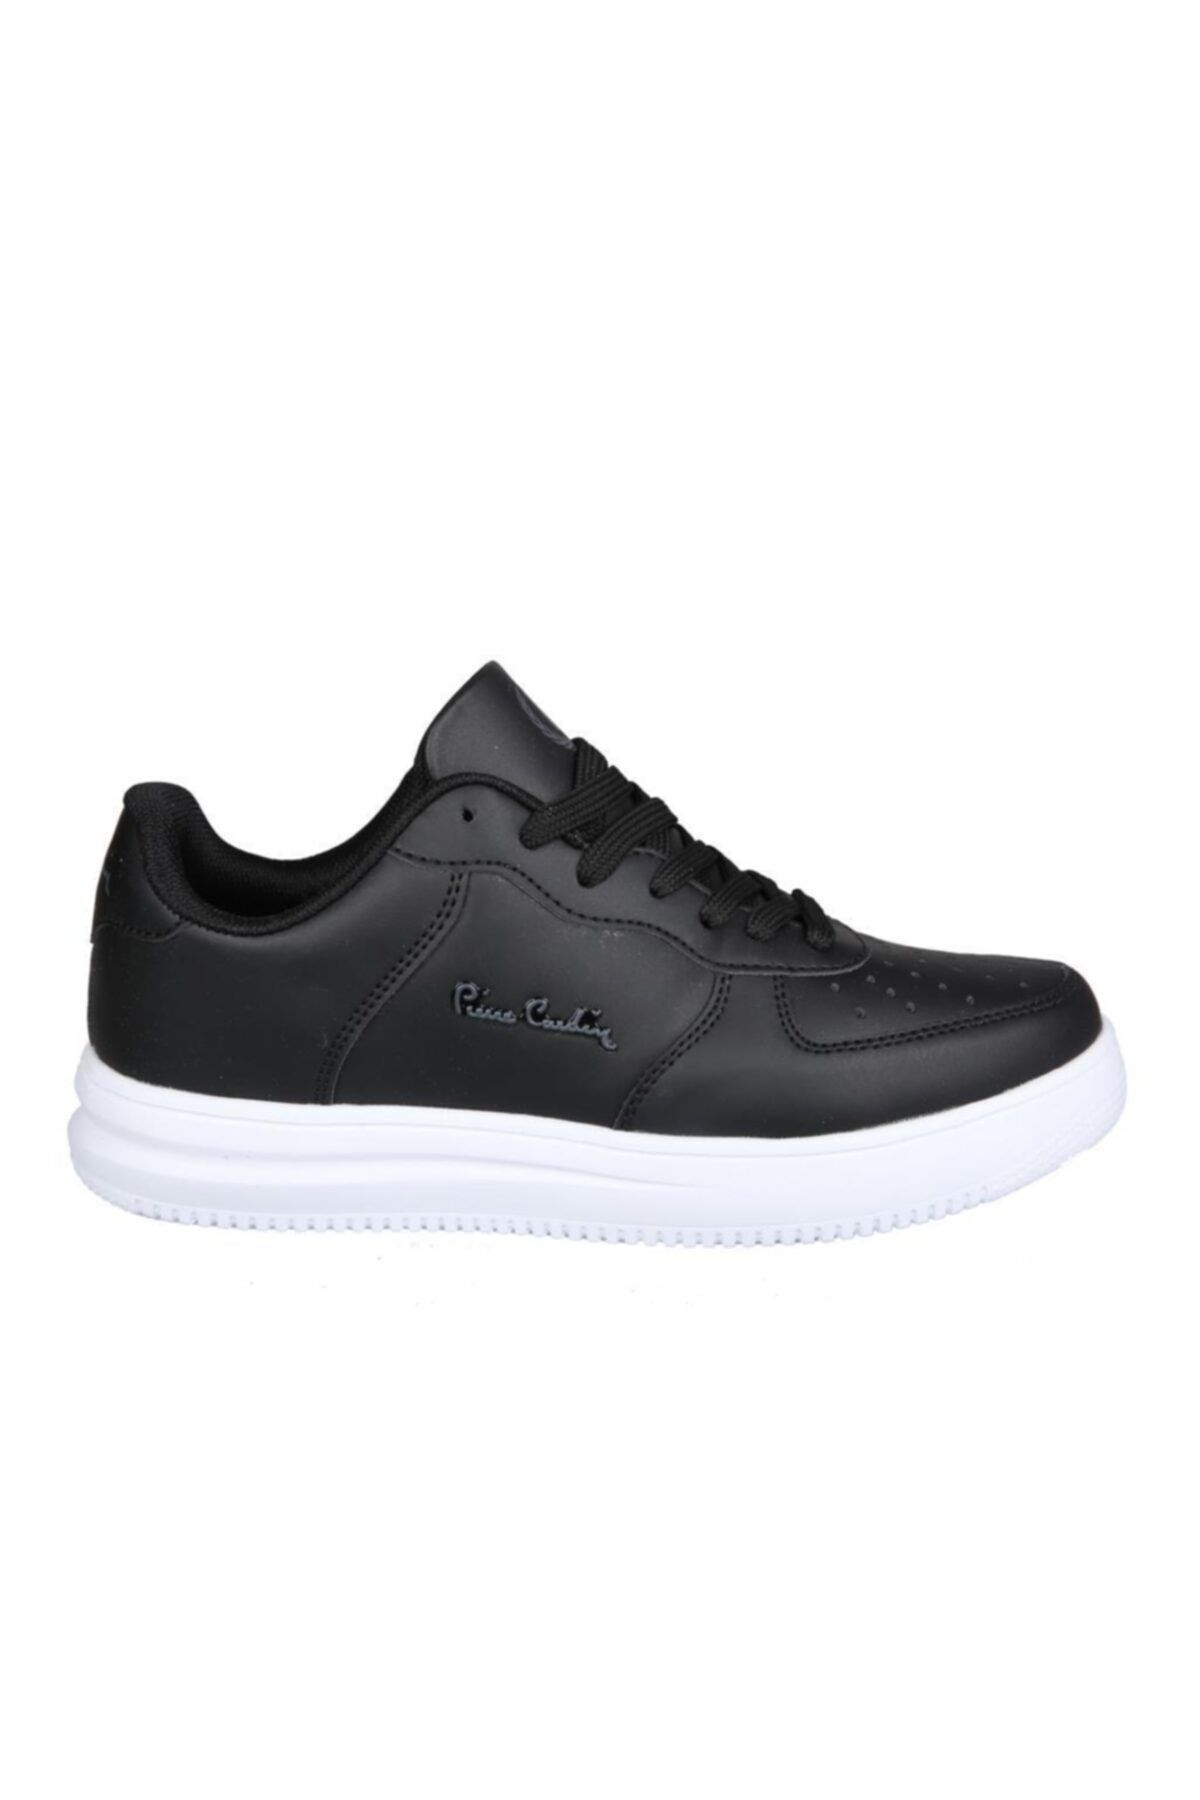 Pierre Cardin Pcs-10148 Siyah Unisex Sneakers